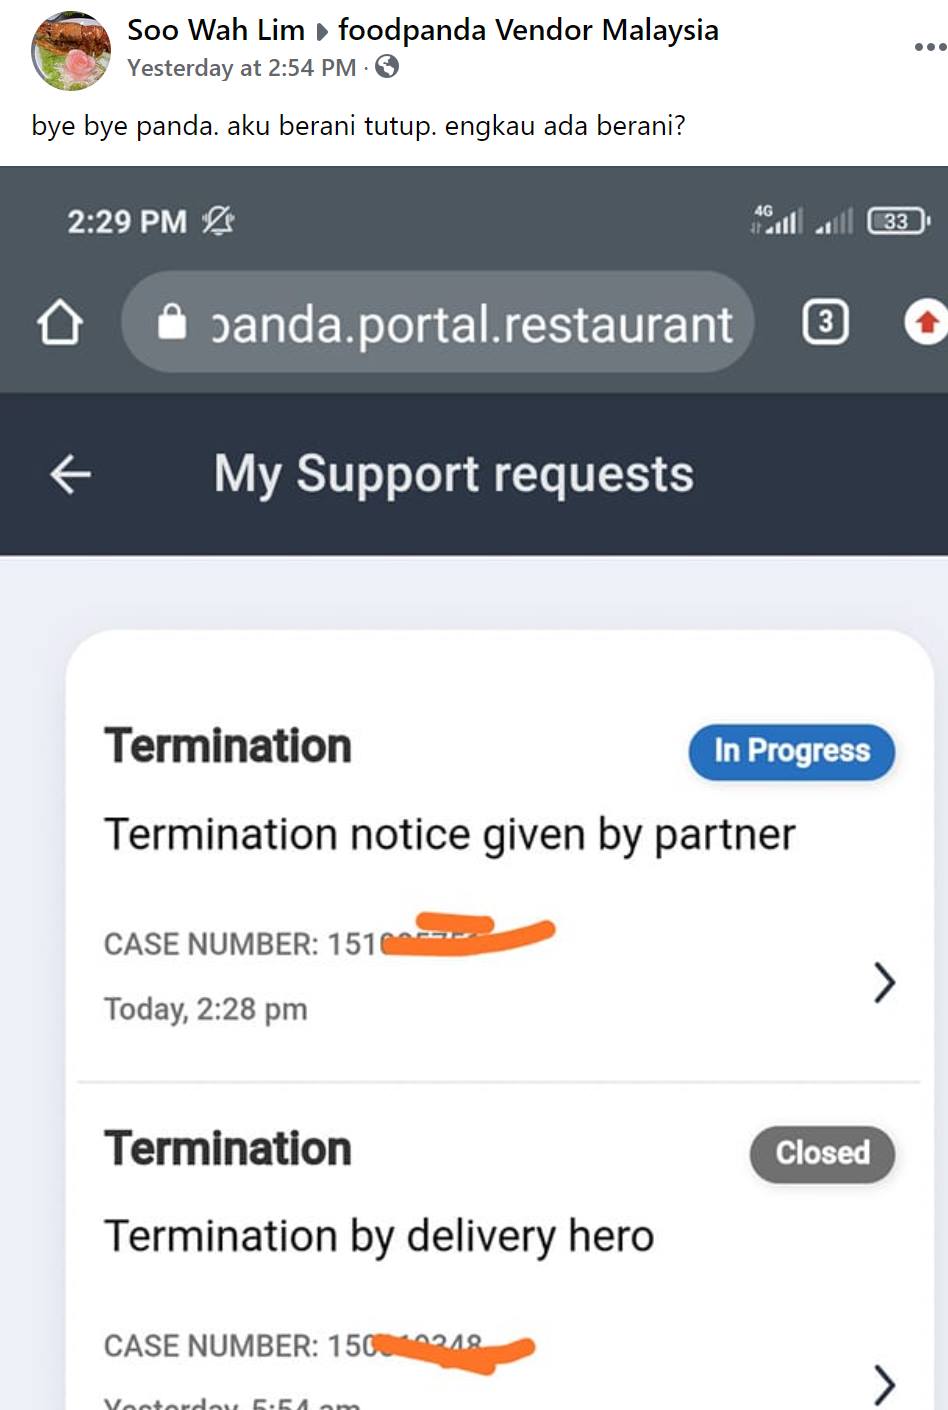 Foodpanda seller giving termination notice